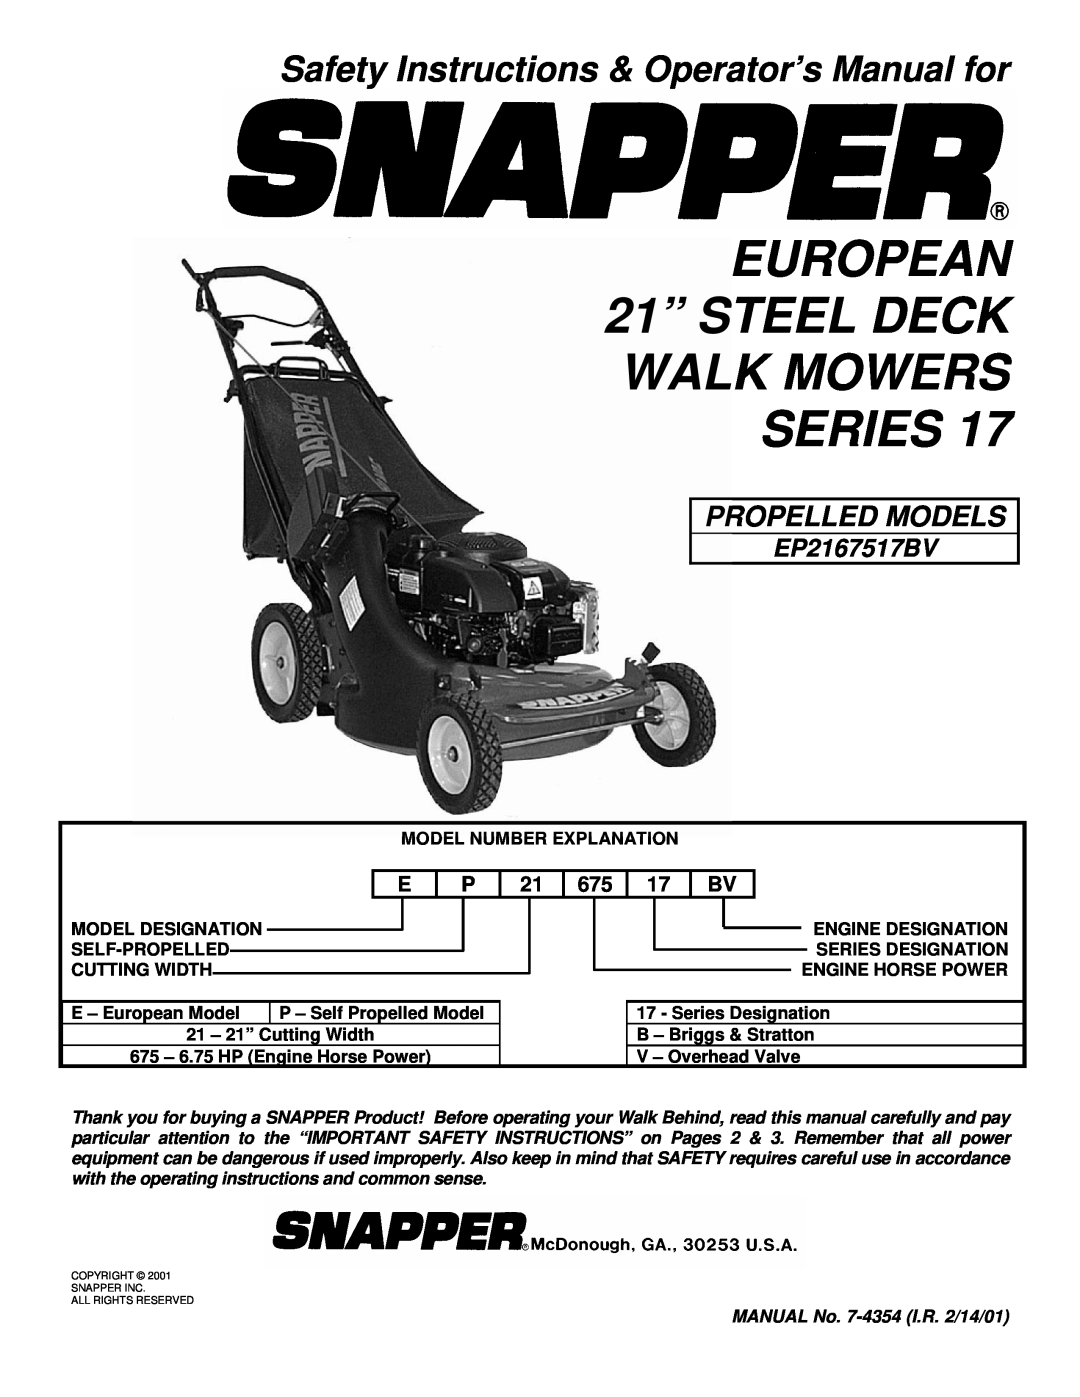 Snapper EP2167517BV important safety instructions EUROPEAN 21” STEEL DECK WALK MOWERS SERIES, Propelled Models 